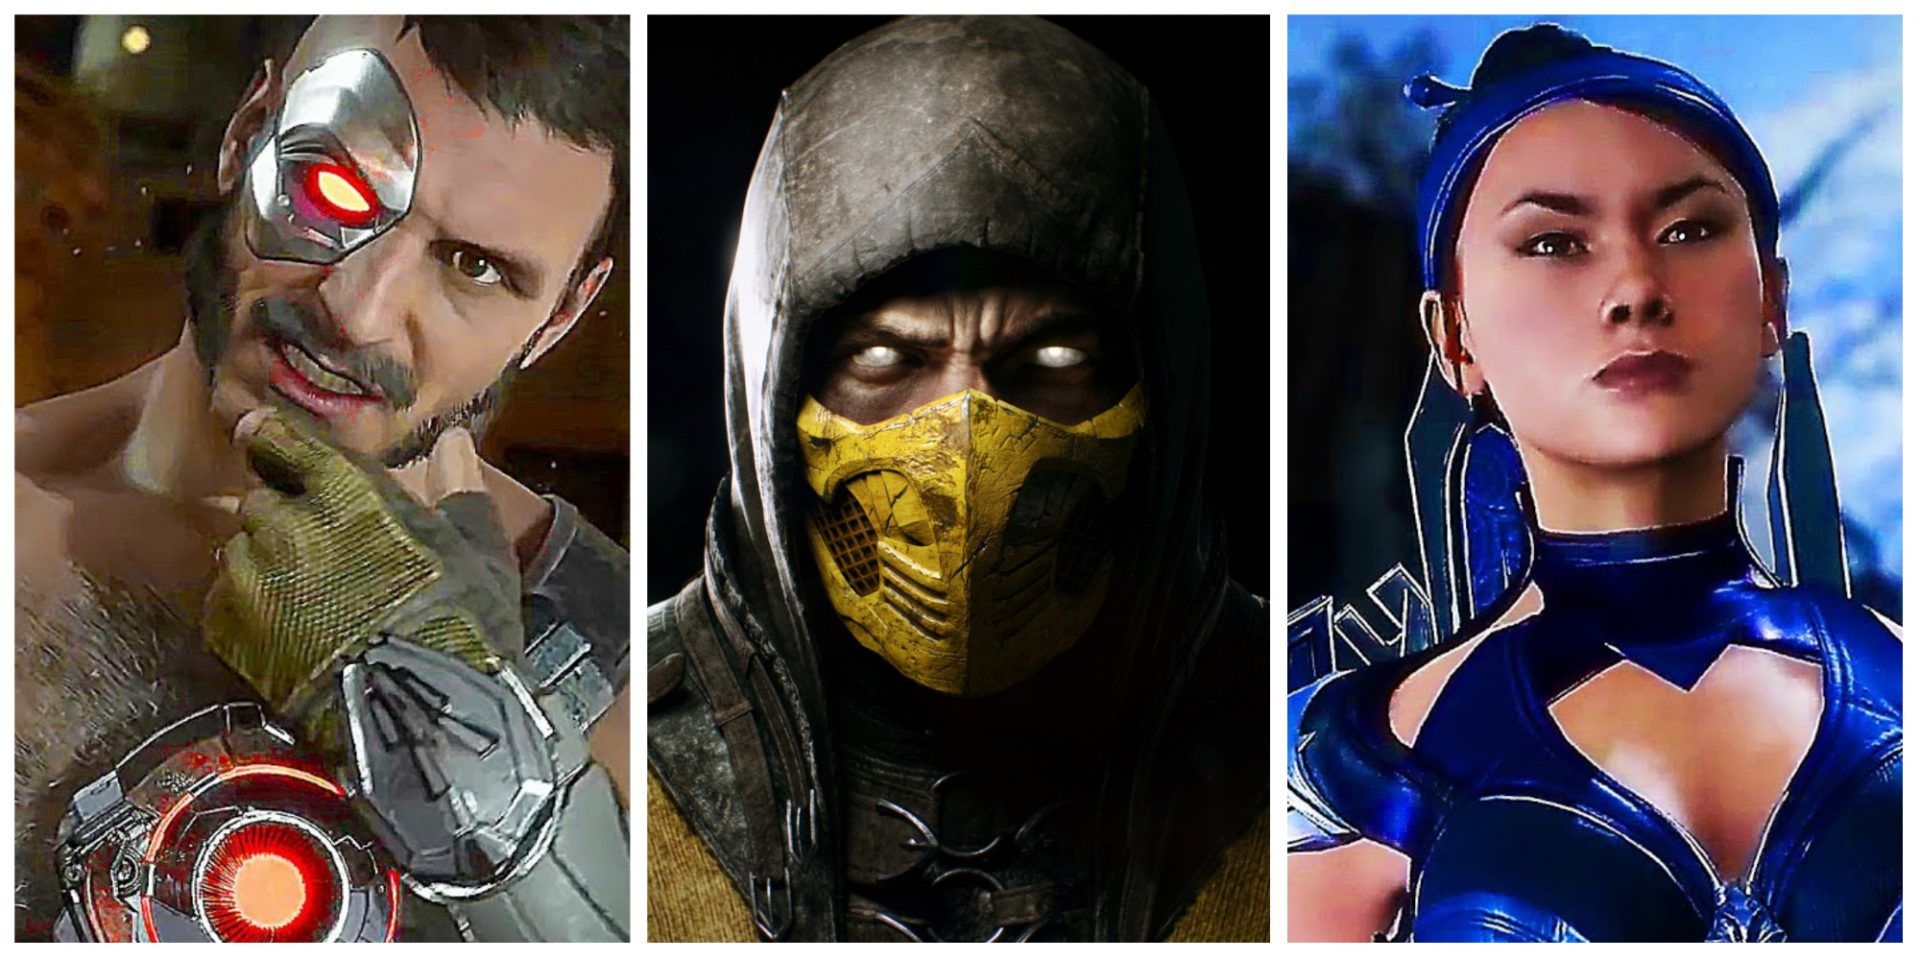 Top 10: Fatalities mais violentos de Mortal Kombat